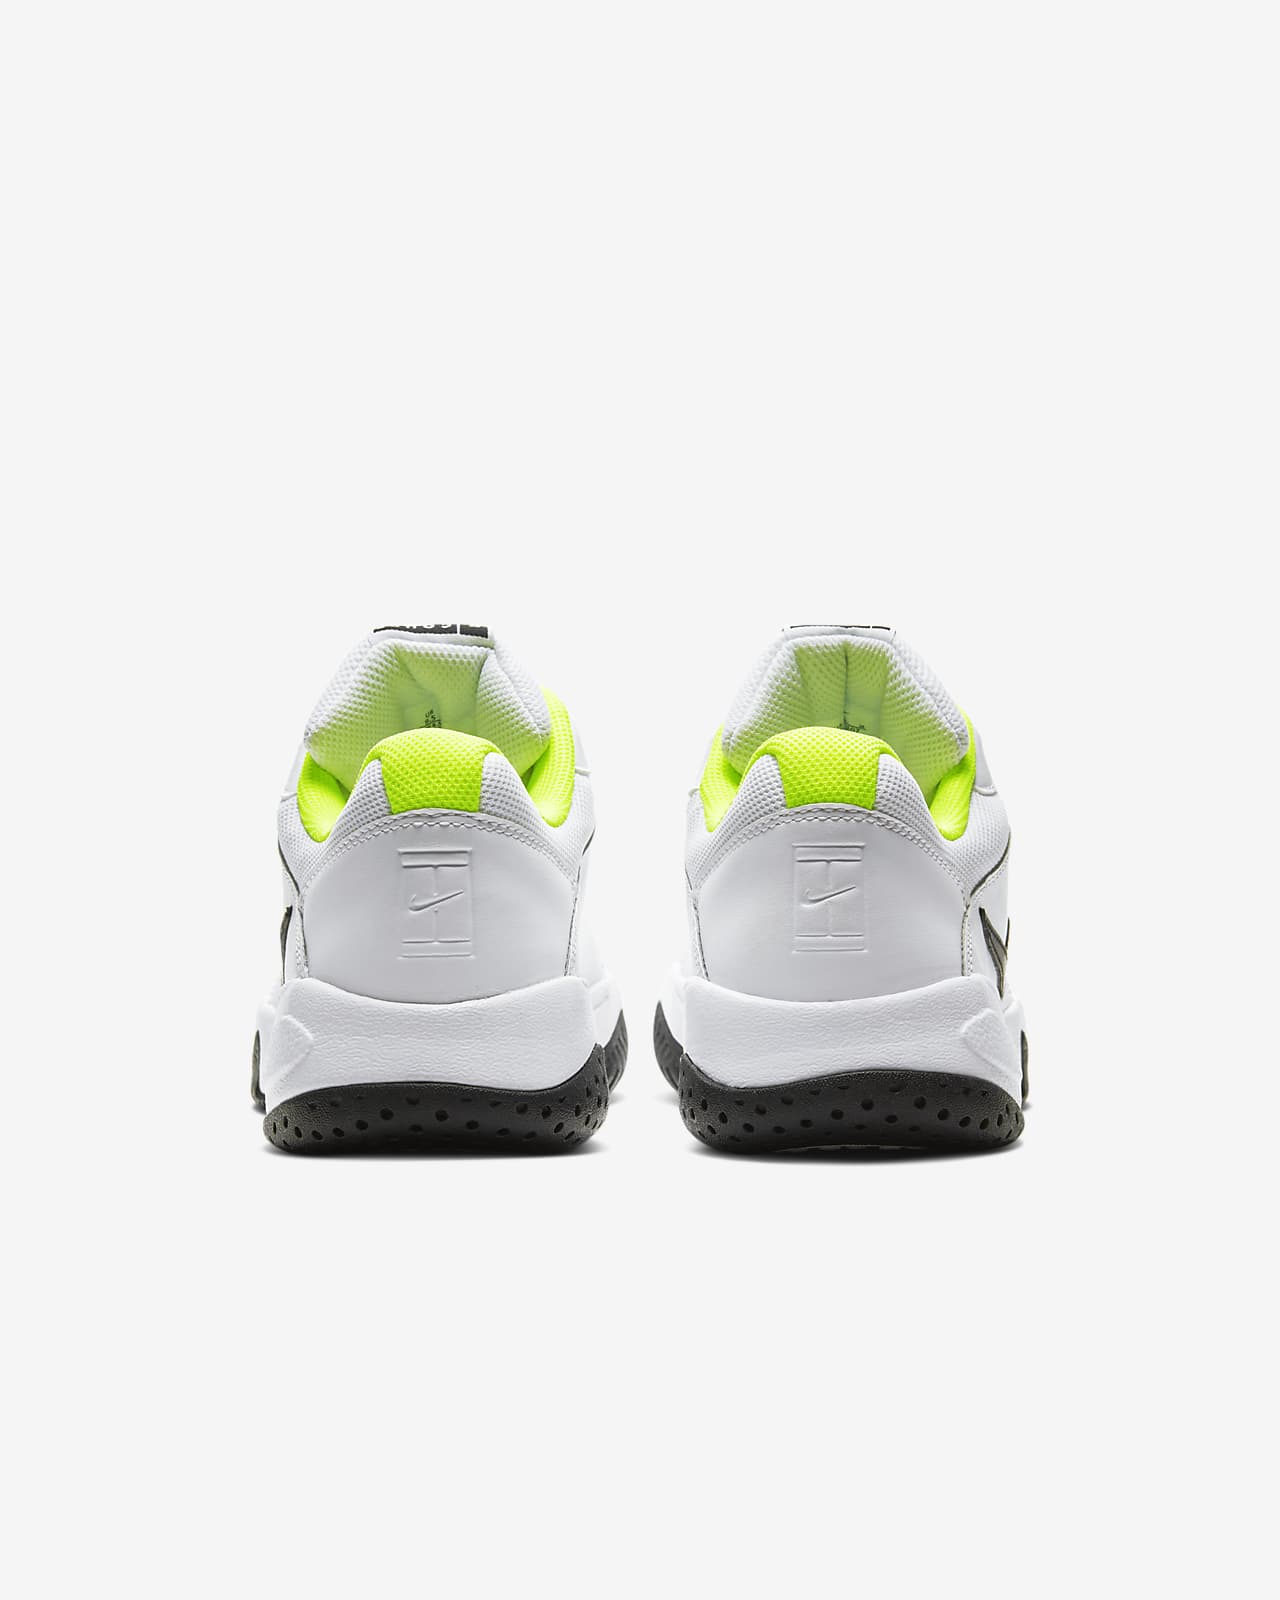 Hard Court Tennis Shoe. Nike SG